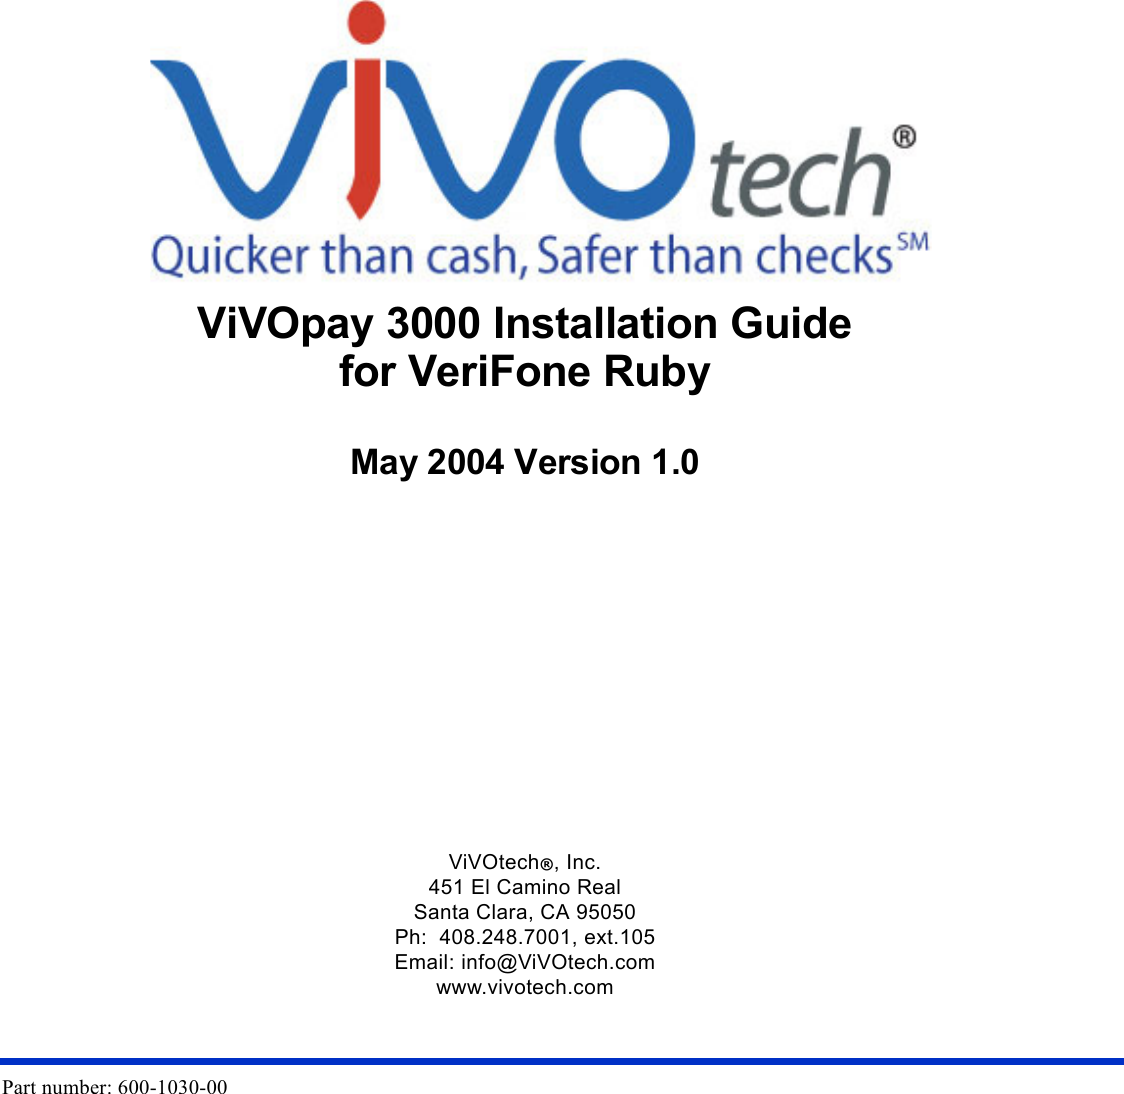 Part number: 600-1030-00                                                                                                                                AViVOpay 3000 Installation Guidefor VeriFone Ruby  May 2004 Version 1.0ViVOtech®, Inc.451 El Camino RealSanta Clara, CA 95050Ph:  408.248.7001, ext.105Email: info@ViVOtech.comwww.vivotech.com